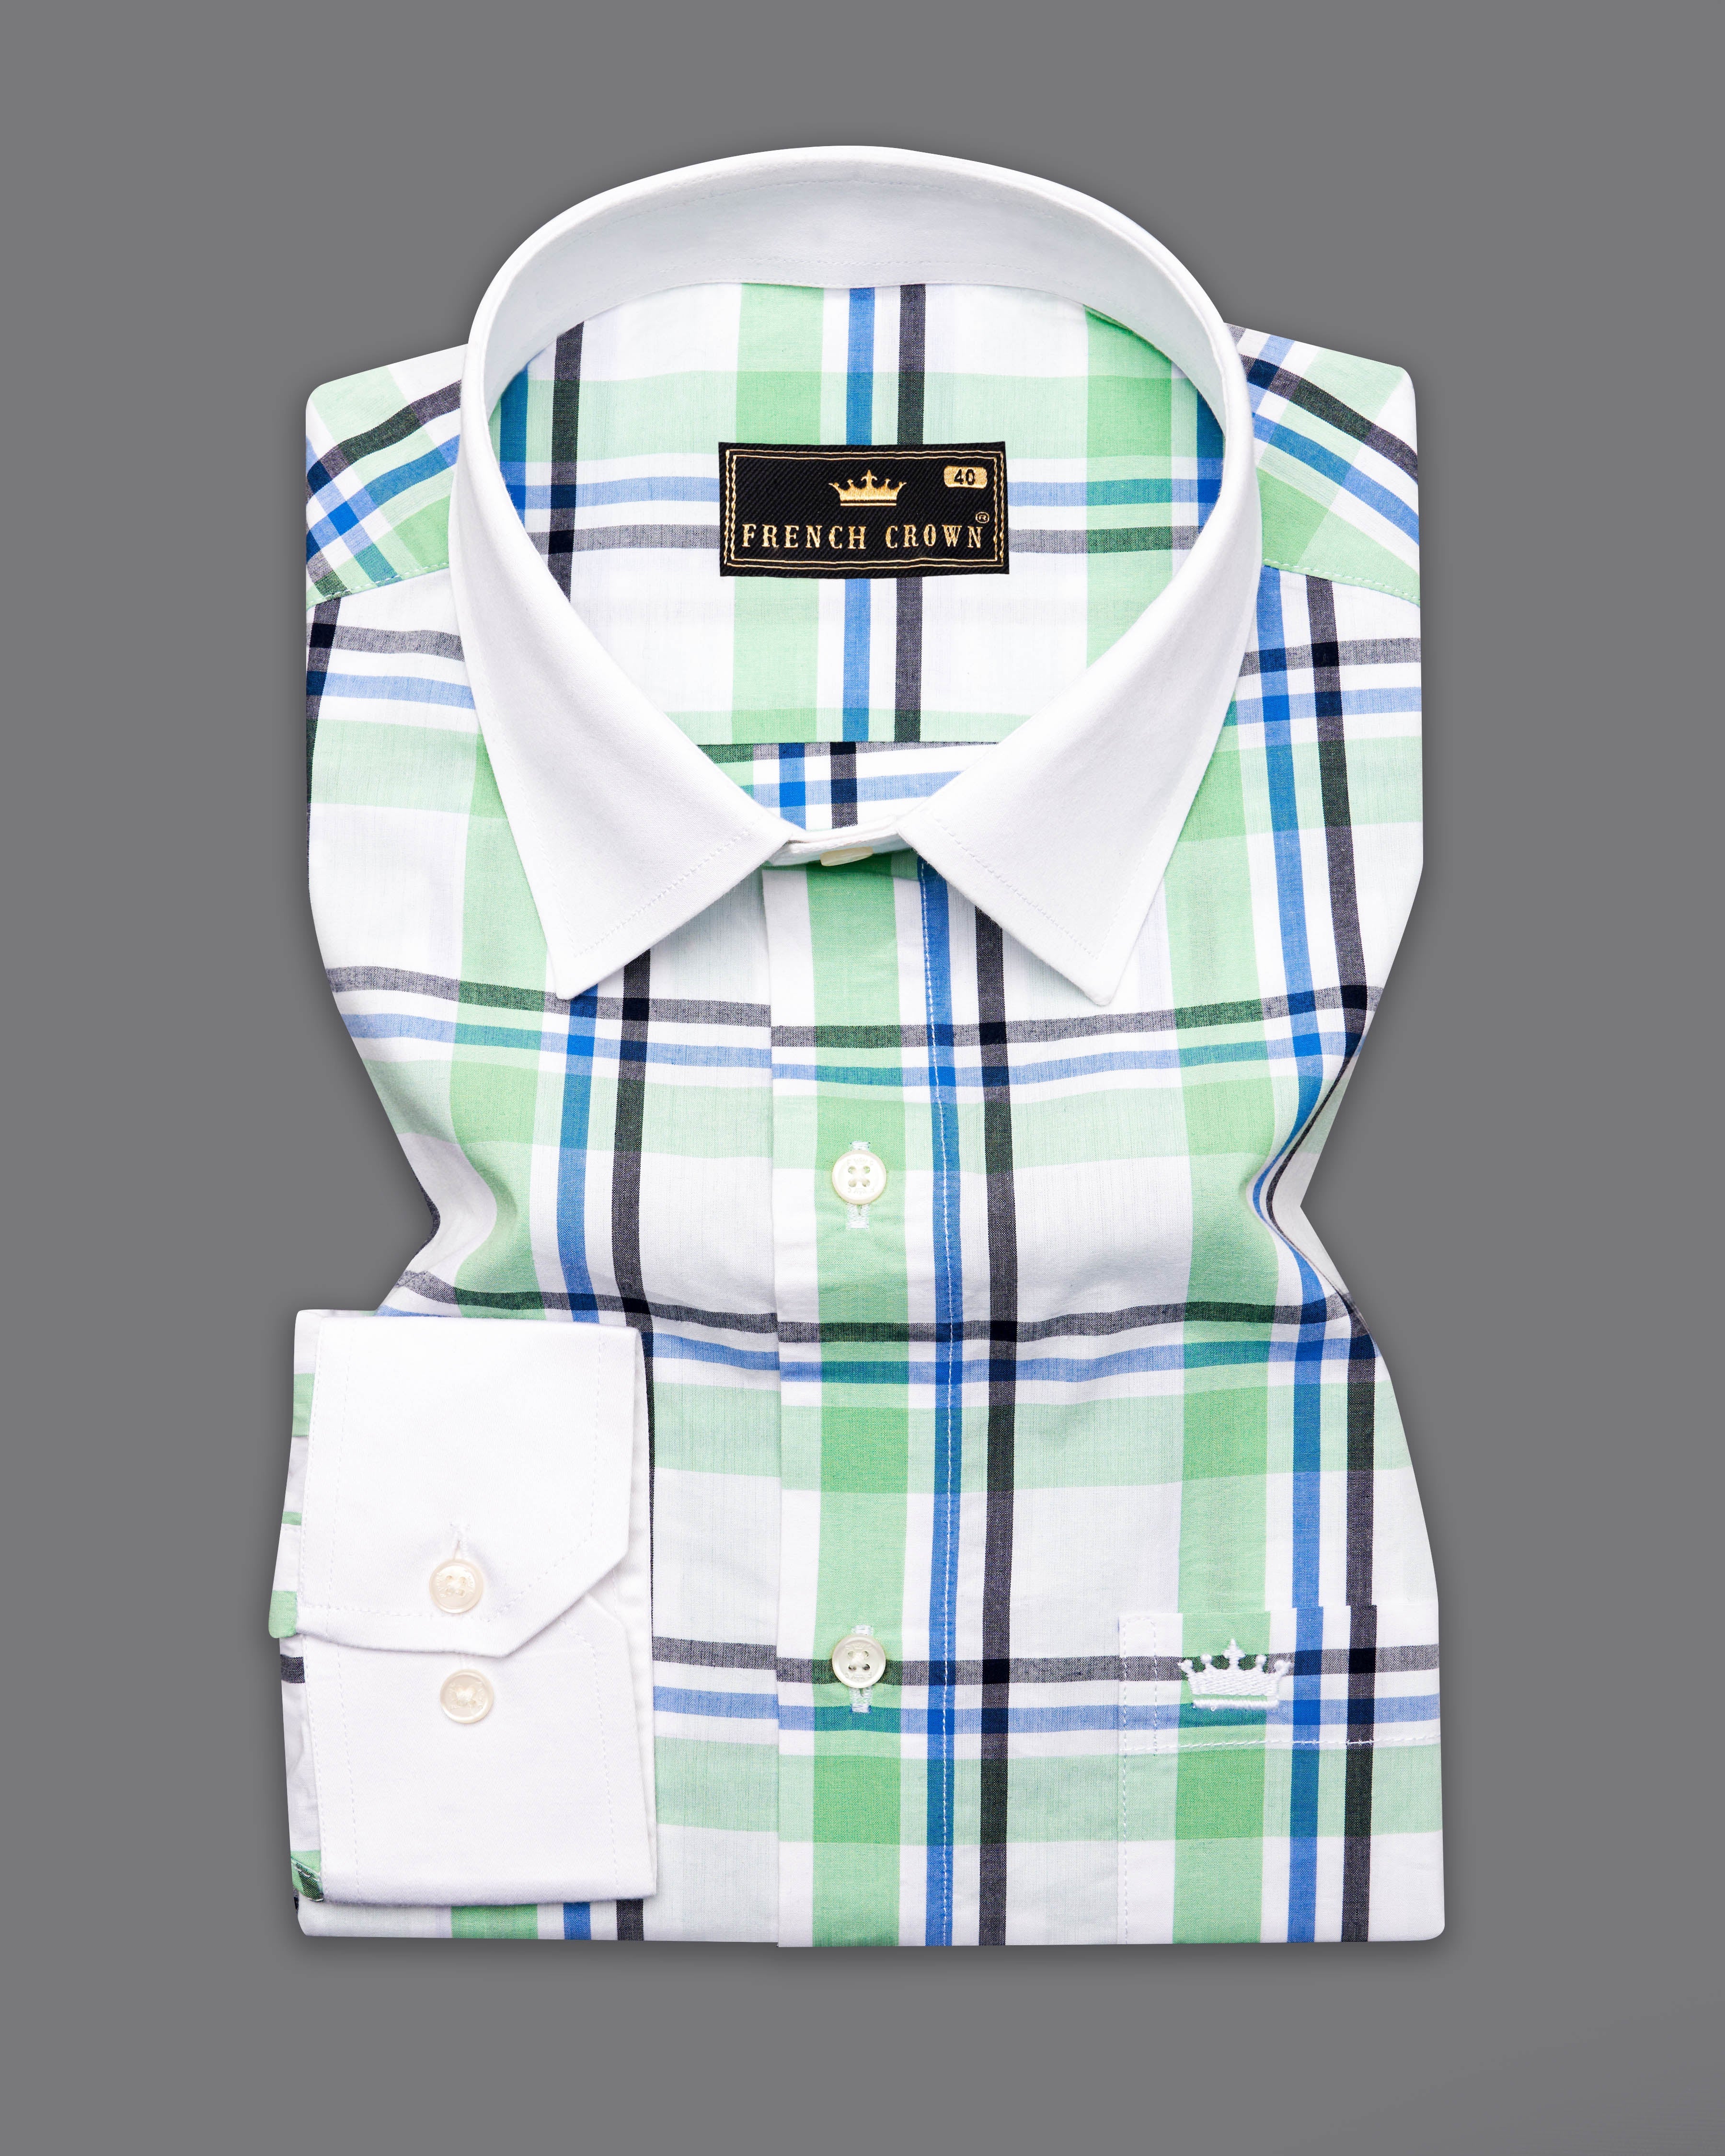 Asparagus Green with White Checkered Printed Super Soft Premium Cotton Designer Shirt 8711-WCC-RPRT-007-38, 8711-WCC-RPRT-007-H-38, 8711-WCC-RPRT-007-39, 8711-WCC-RPRT-007-H-39, 8711-WCC-RPRT-007-40, 8711-WCC-RPRT-007-H-40, 8711-WCC-RPRT-007-42, 8711-WCC-RPRT-007-H-42, 8711-WCC-RPRT-007-44, 8711-WCC-RPRT-007-H-44, 8711-WCC-RPRT-007-46, 8711-WCC-RPRT-007-H-46, 8711-WCC-RPRT-007-48, 8711-WCC-RPRT-007-H-48, 8711-WCC-RPRT-007-50, 8711-WCC-RPRT-007-H-50, 8711-WCC-RPRT-007-52, 8711-WCC-RPRT-007-H-52